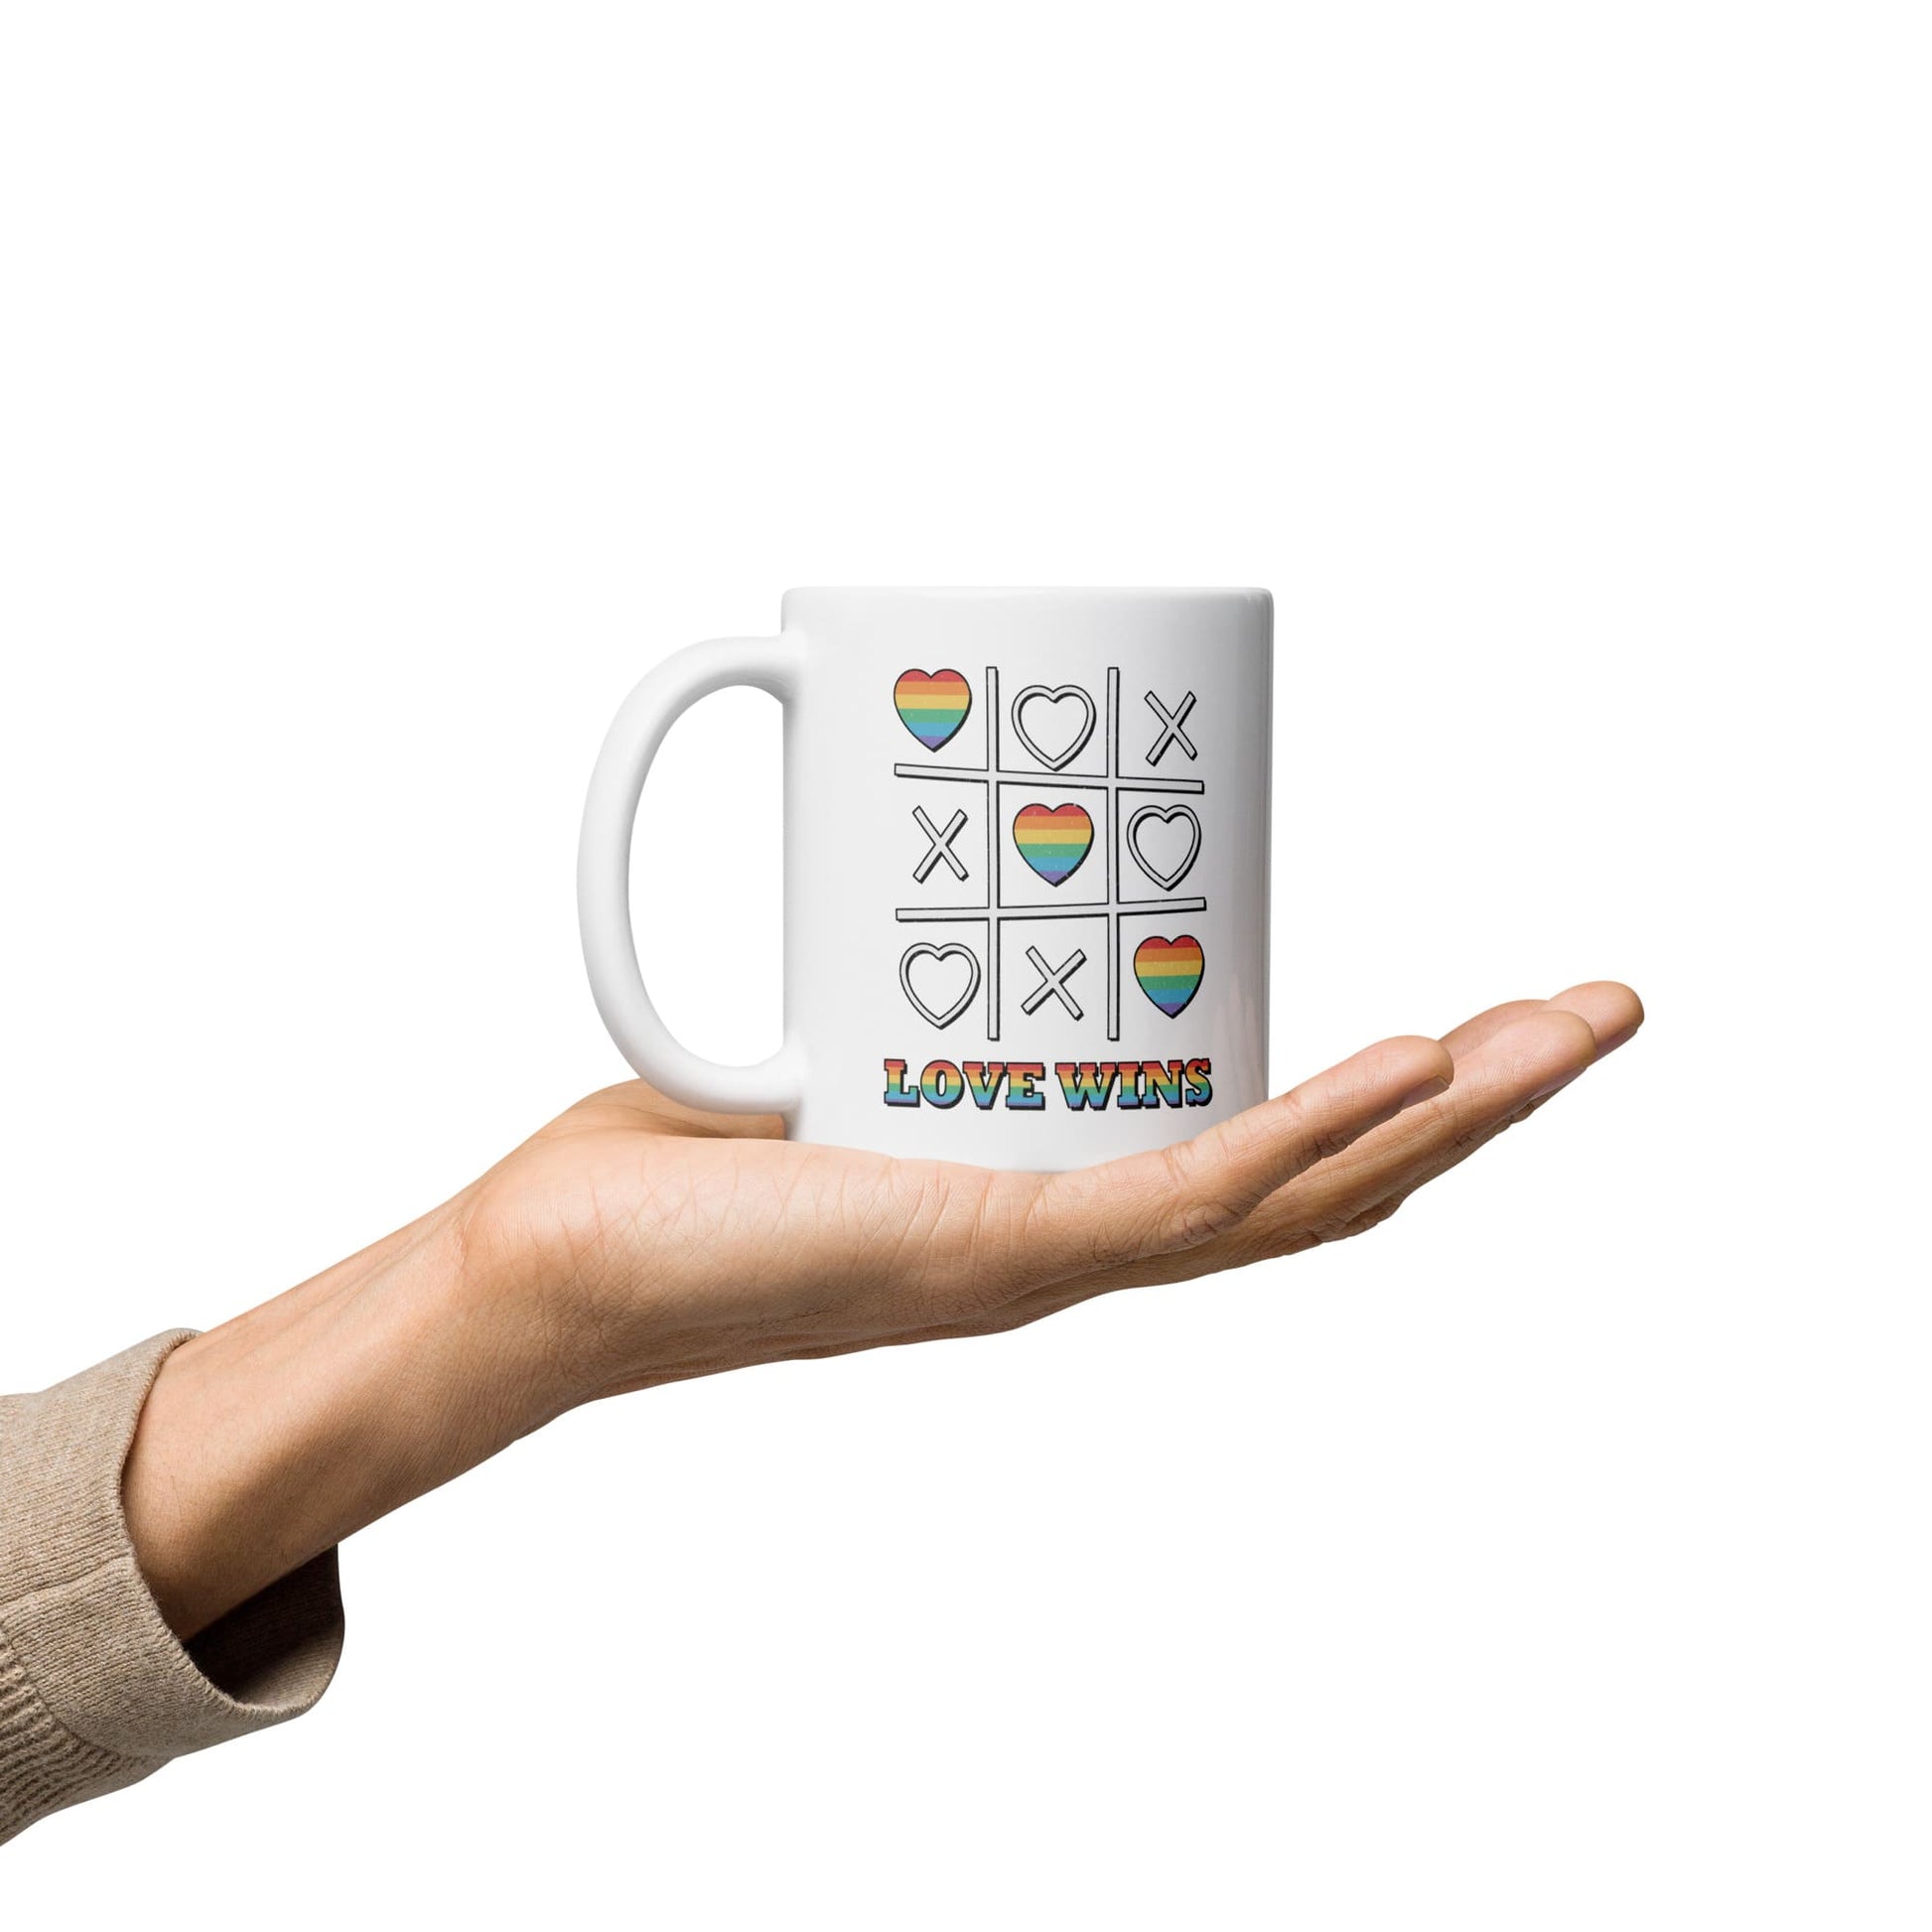 LGBT mug, love wins pride coffee or tea cup on hand